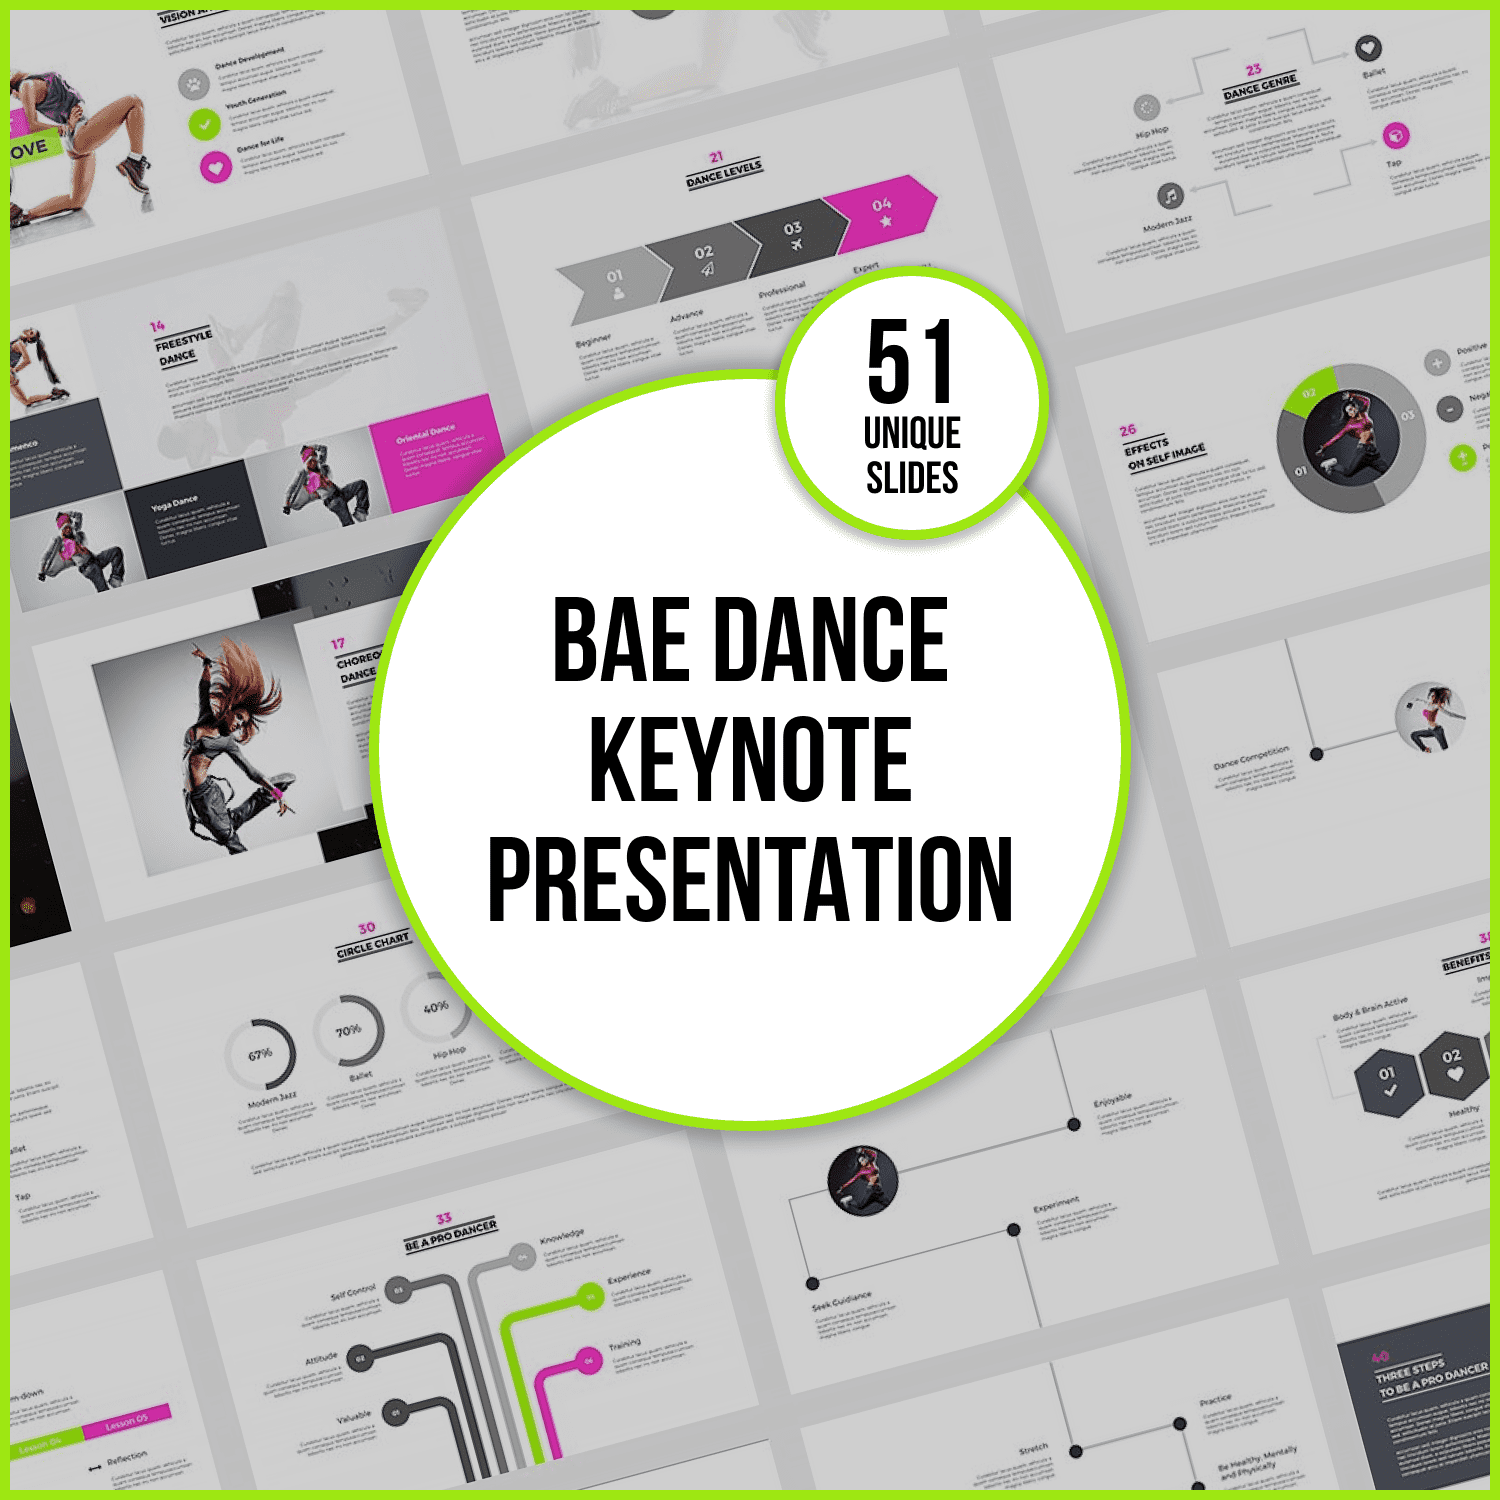 Bae Dance Keynote Presentation.